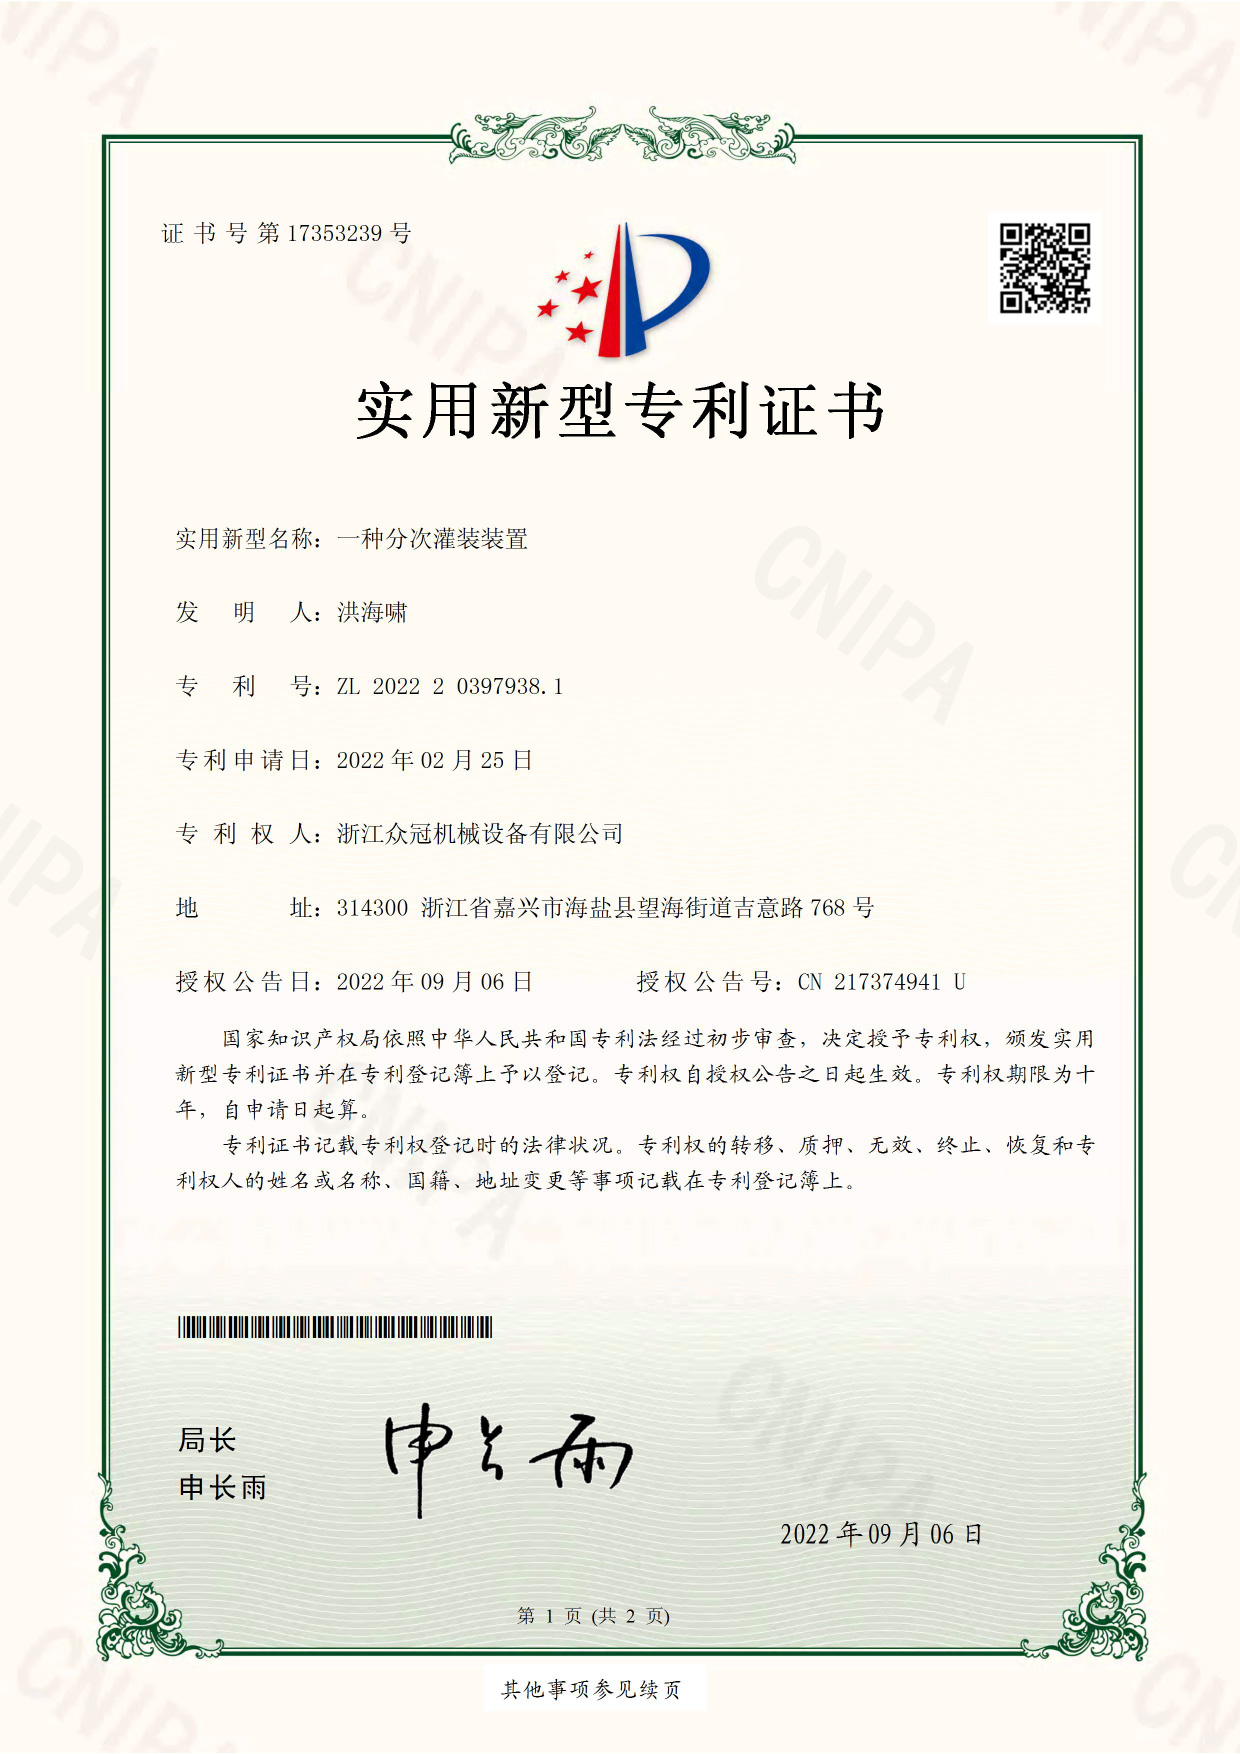 Certificate:A batch filling device